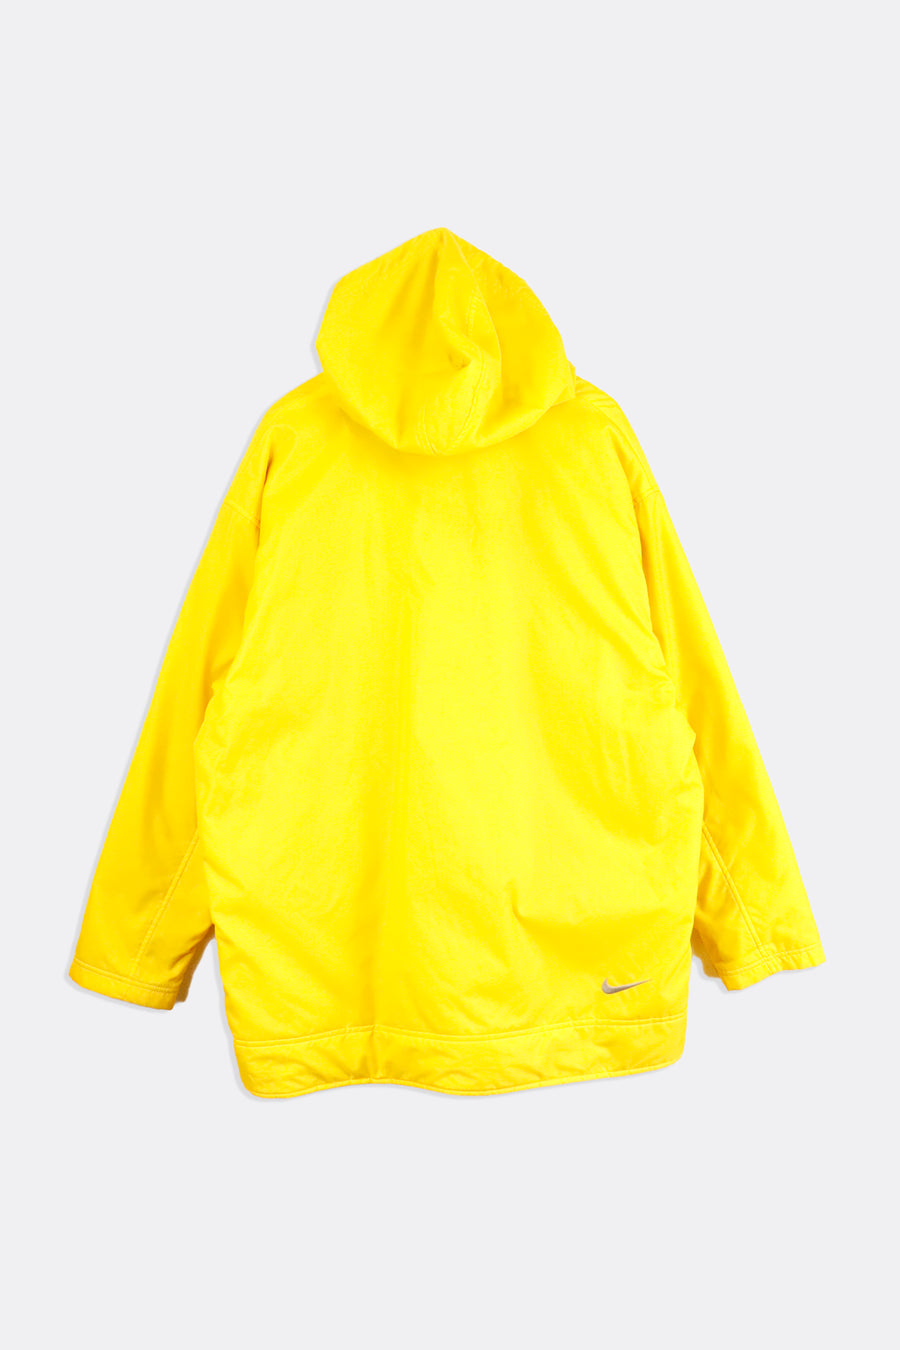 Vintage Nike Thick Rain Jacket With Fleece Lining Full Zip Outerwear Sz 2XL